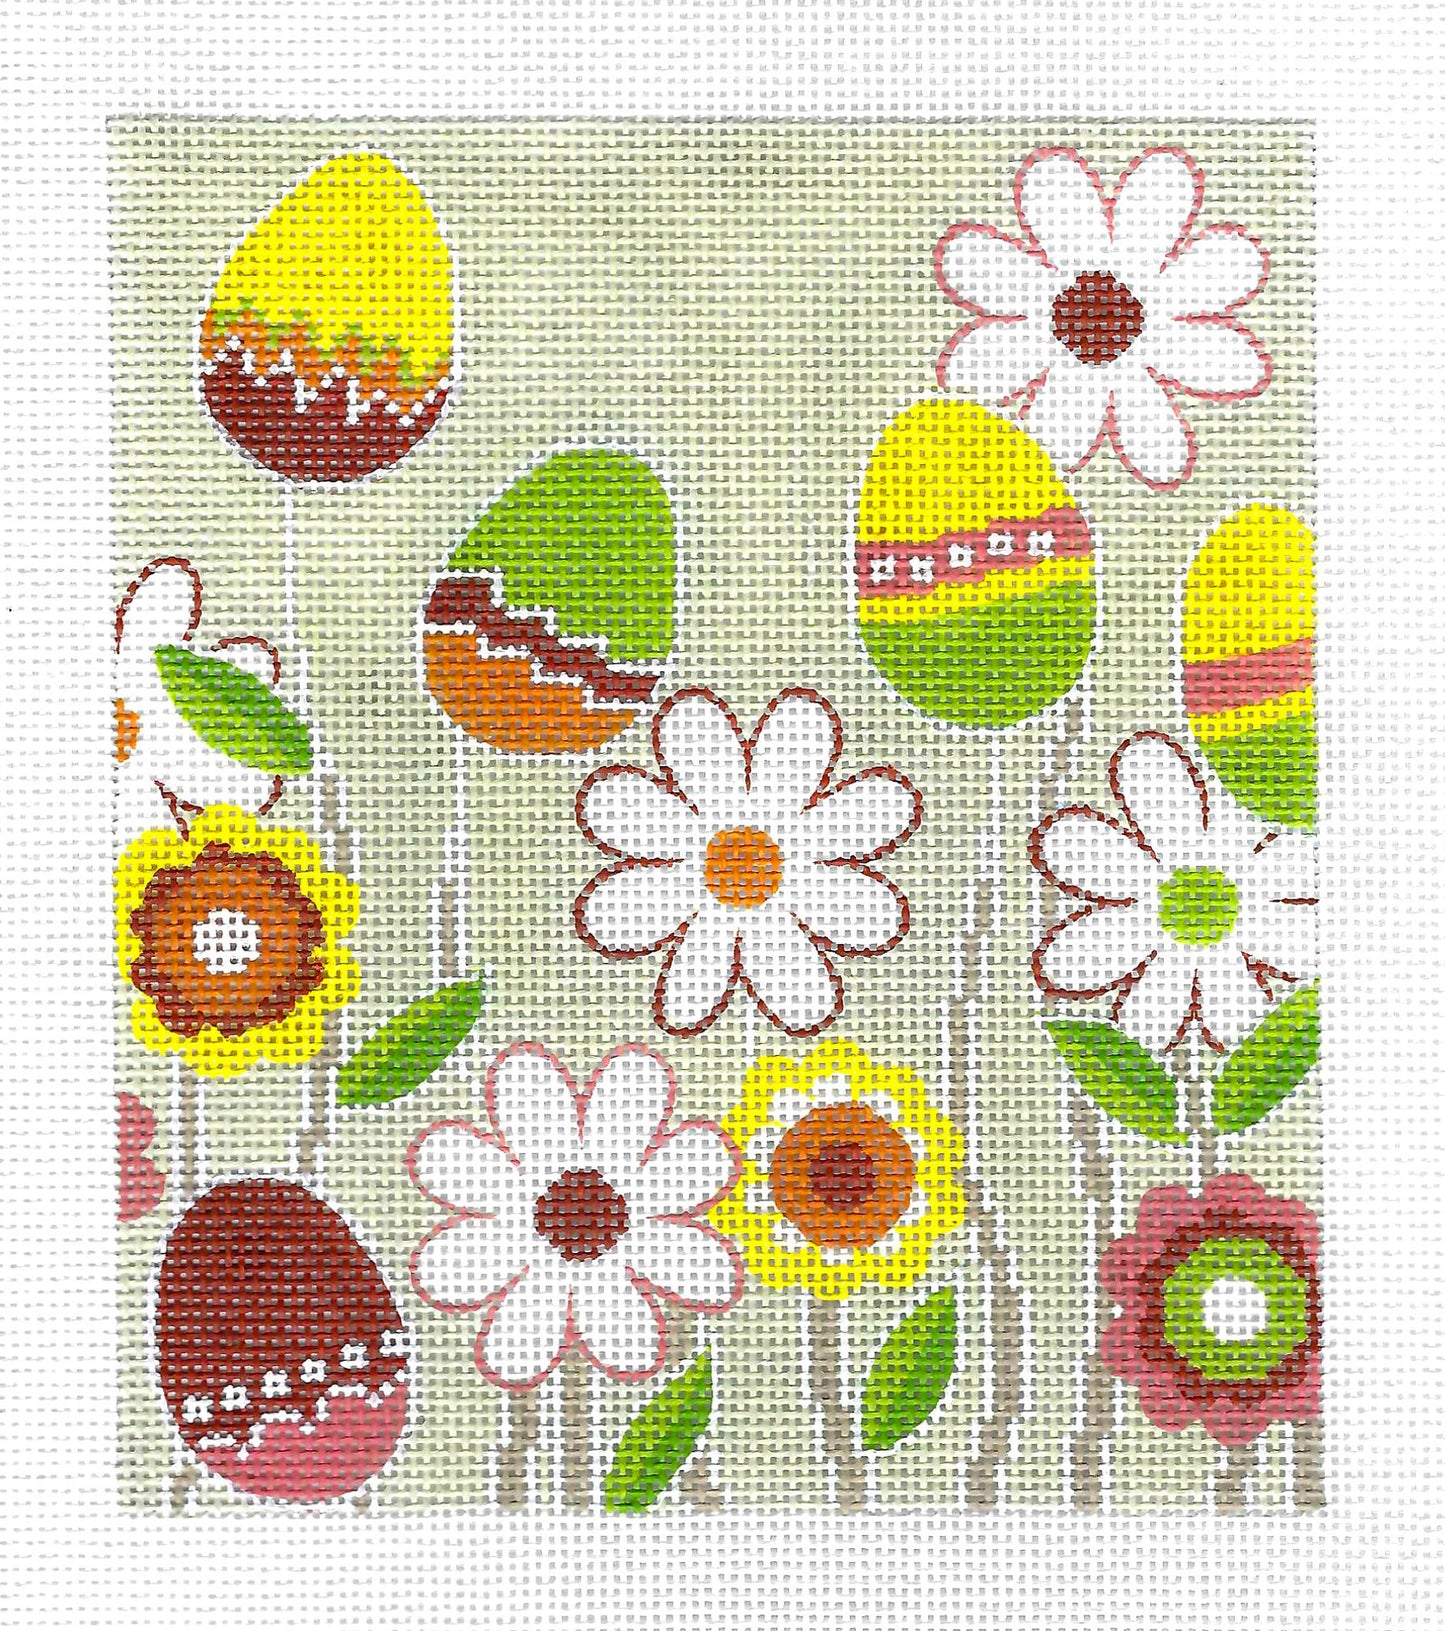 Insert ~ Multi-Colored Easter Garden Eggs & Flowers handpainted Needlepoint Canvas ~BG Size Insert~ by LEE